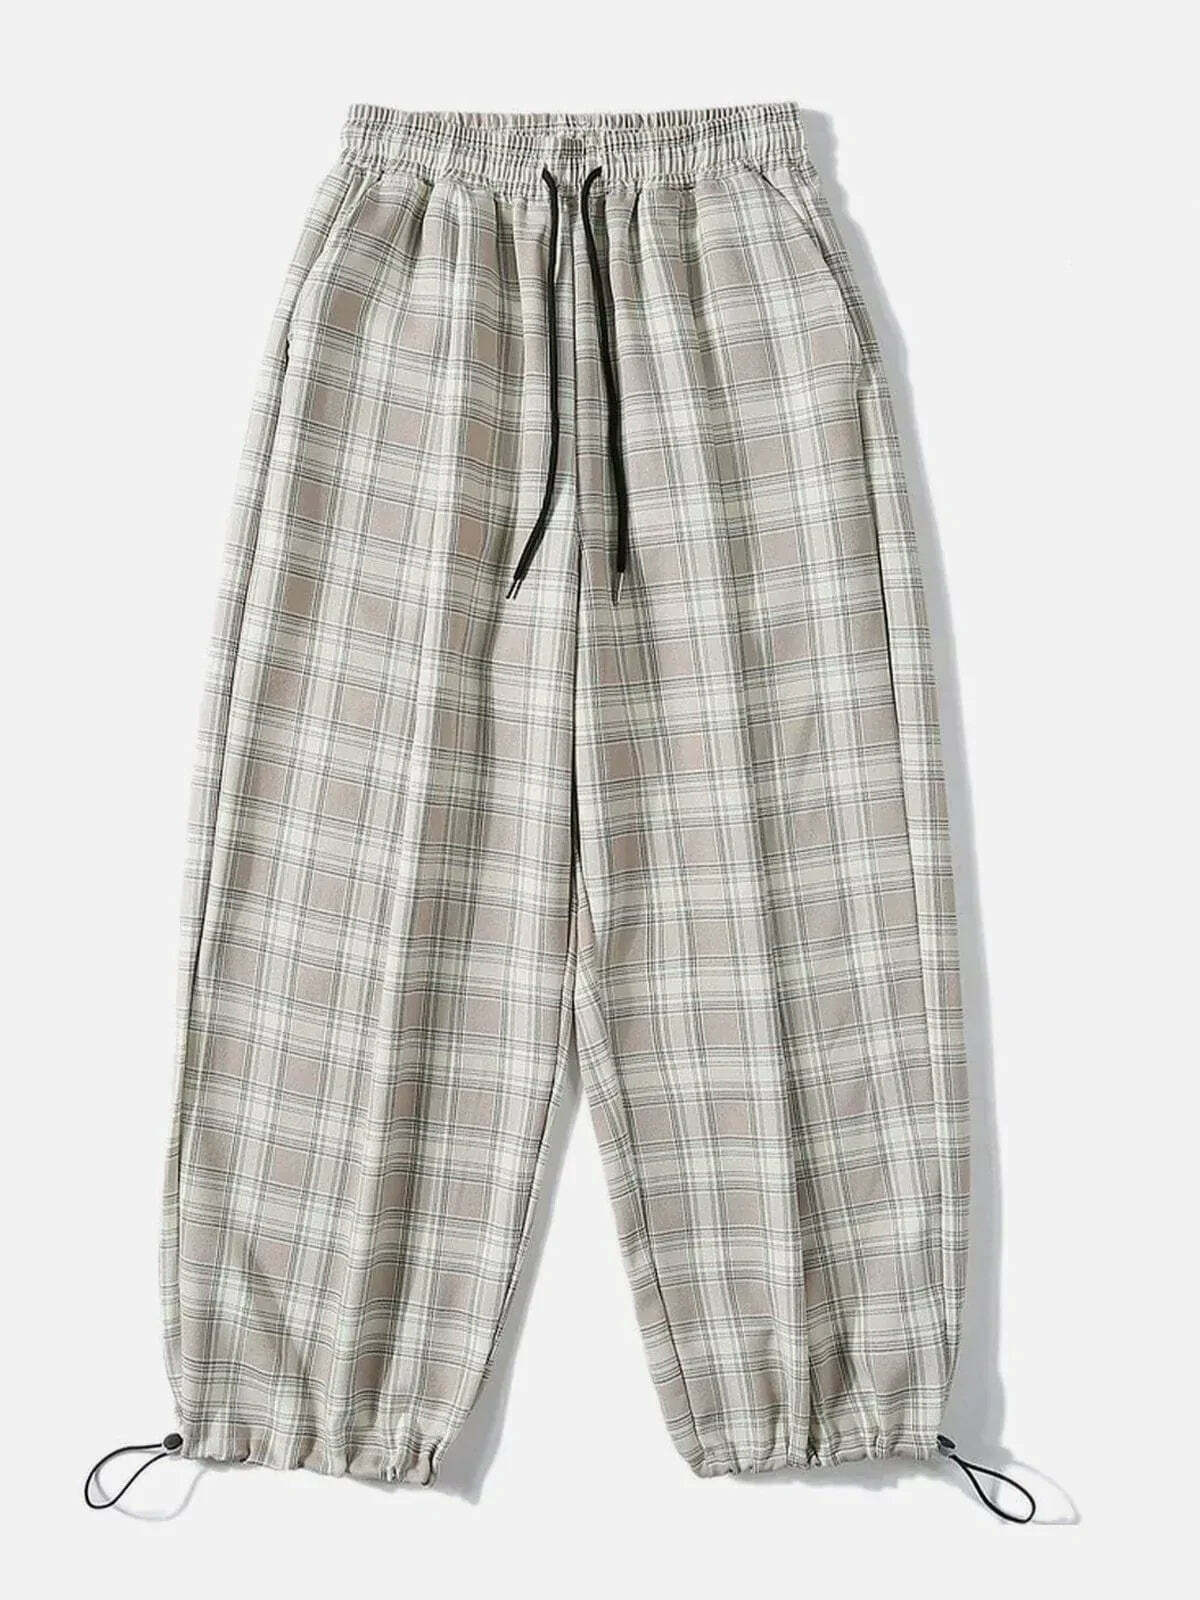 plaid drawstring casual pants urban chic streetwear 5646